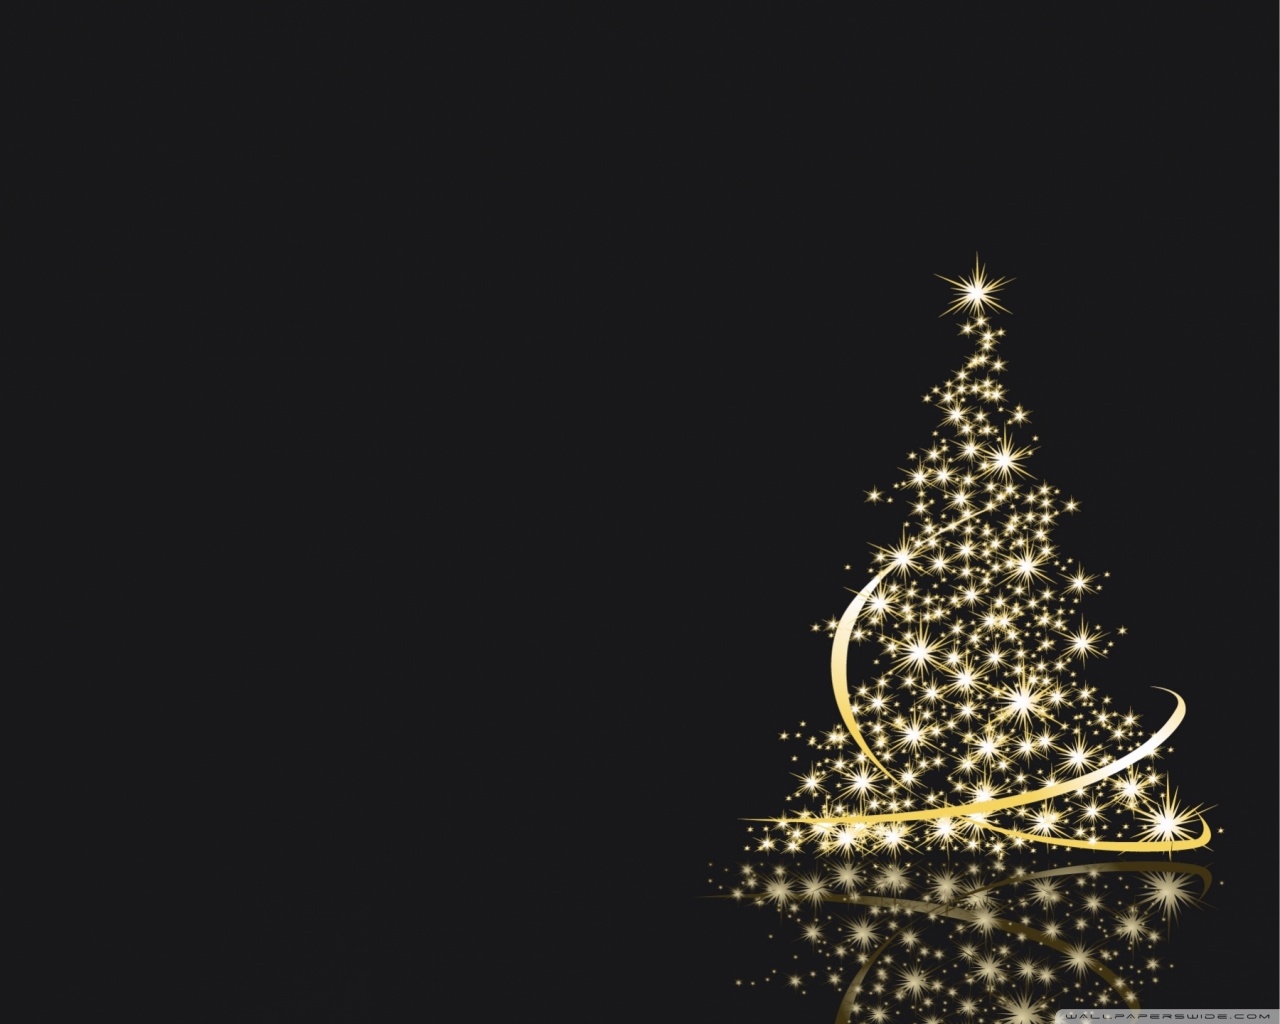 인사말 카드 벽지,크리스마스 트리,크리스마스 장식,나무,크리스마스 장식,크리스마스 조명